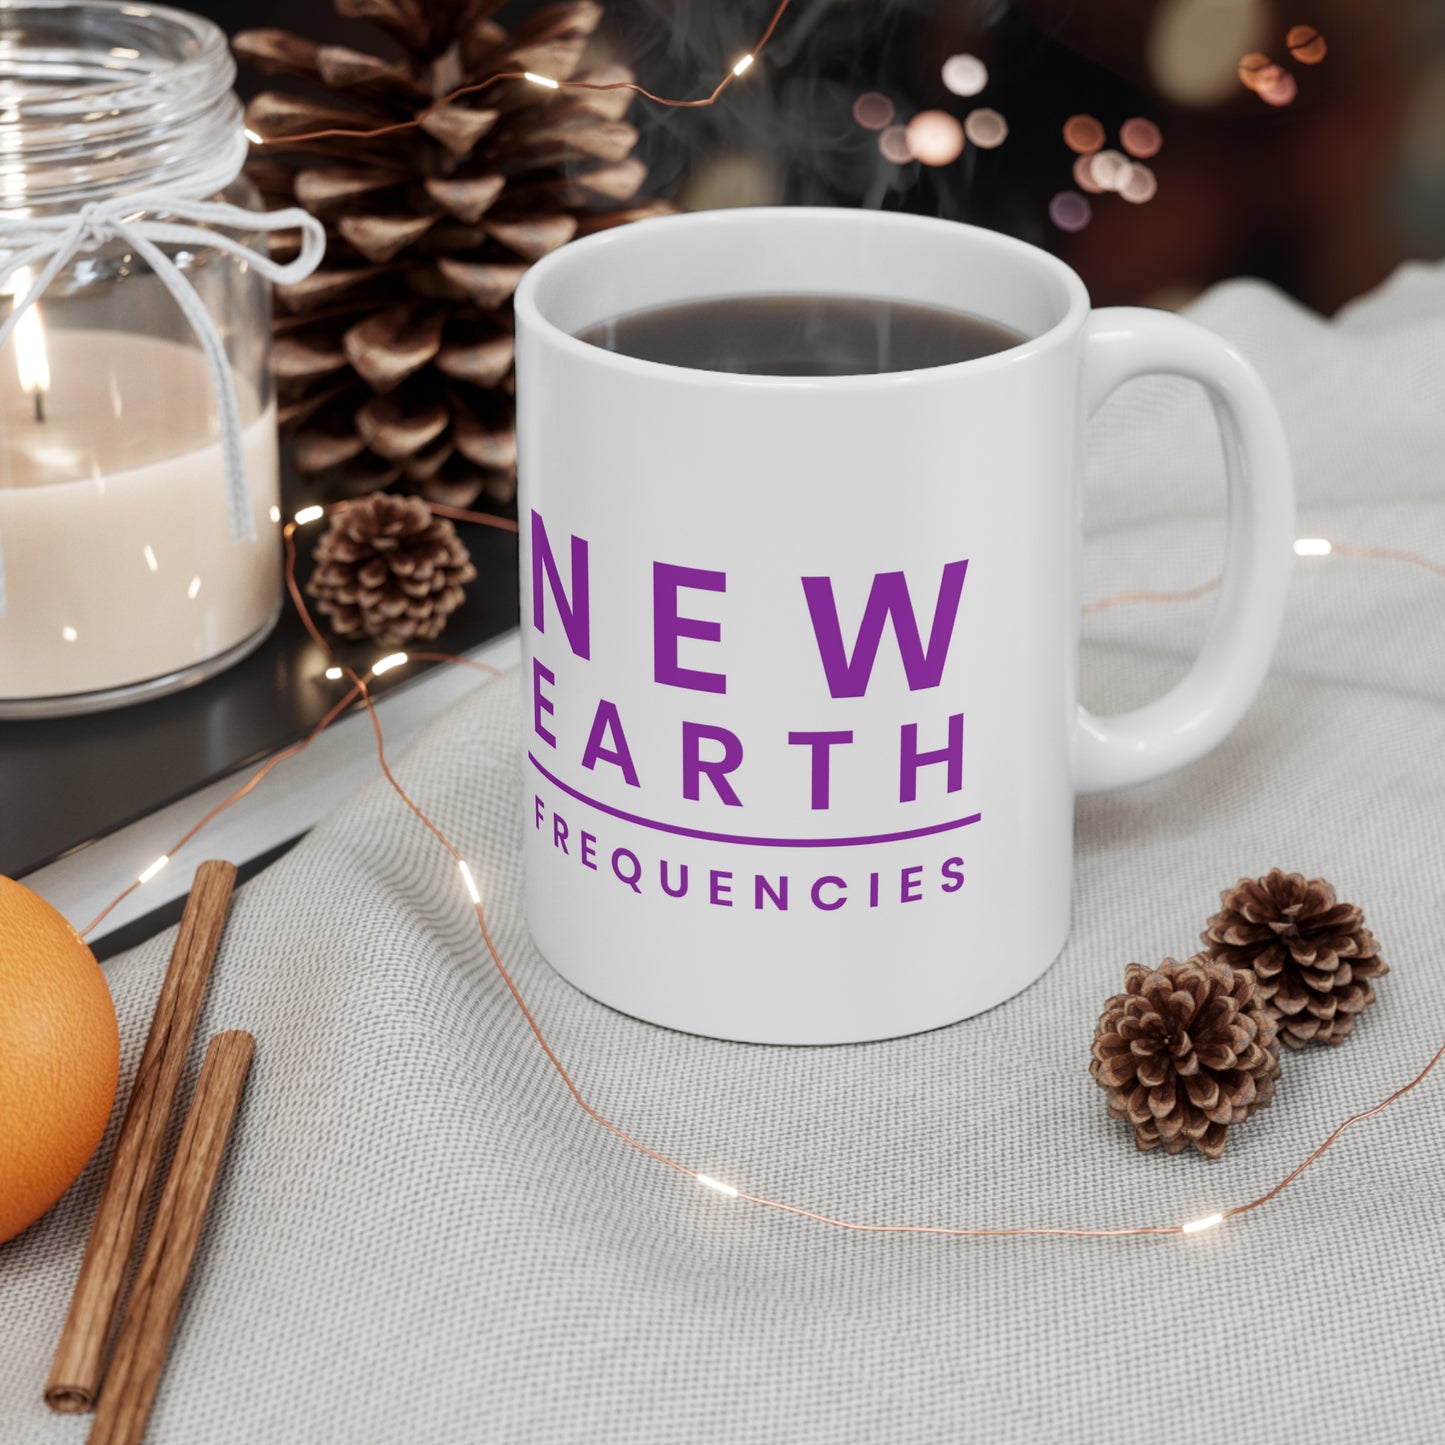 The Great Awakening - New Earth Frequencies - High Vibe Coffee Mug